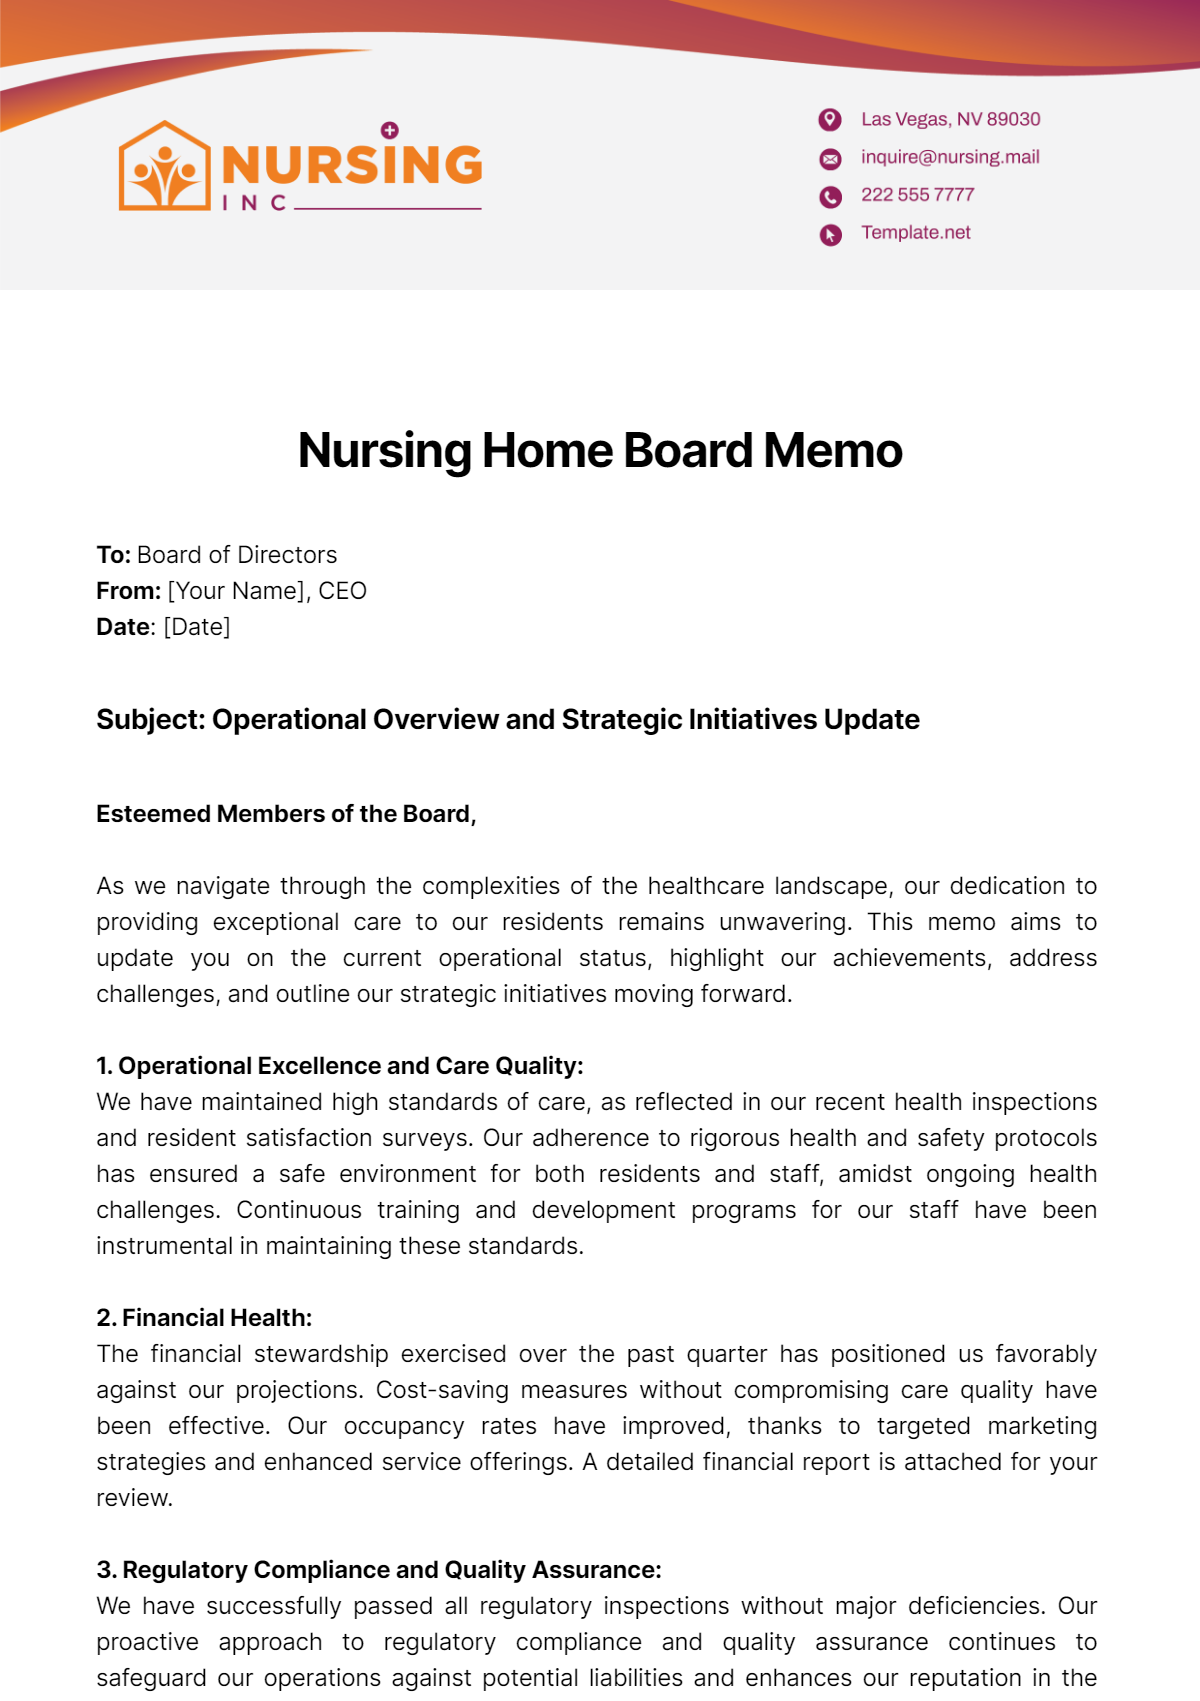 Nursing Home Board Memo Template